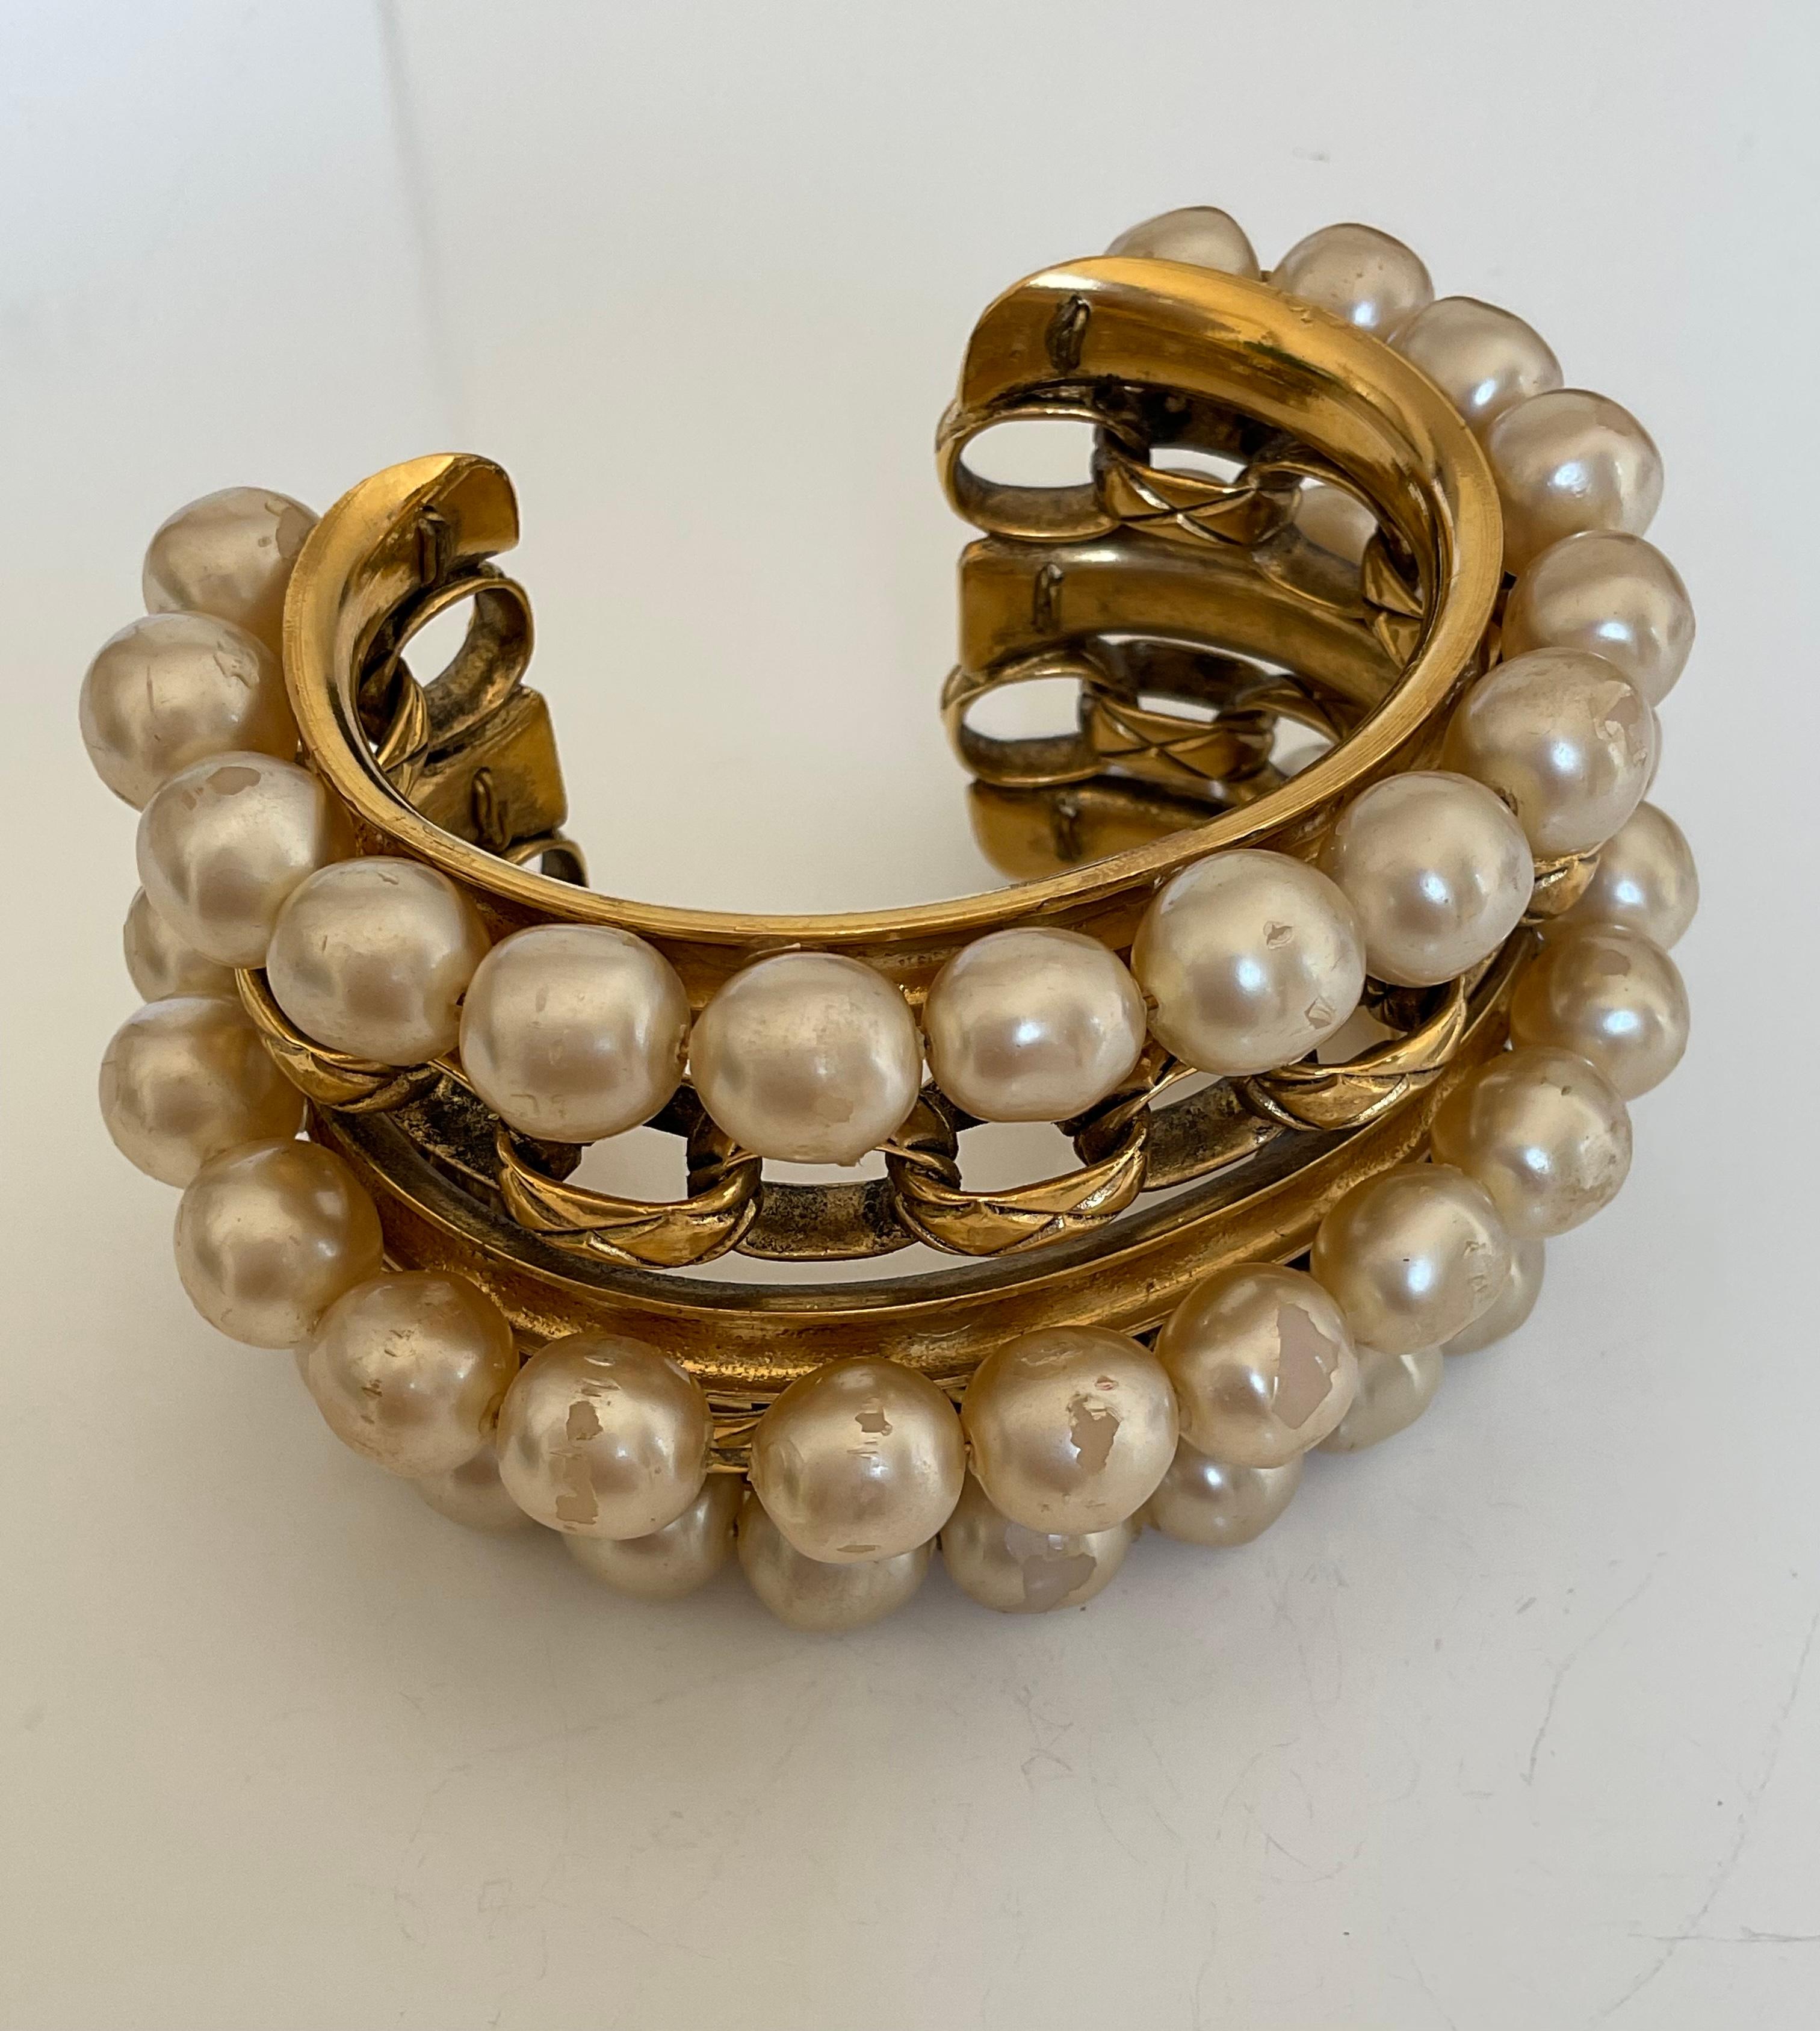 chanel bracelet gold